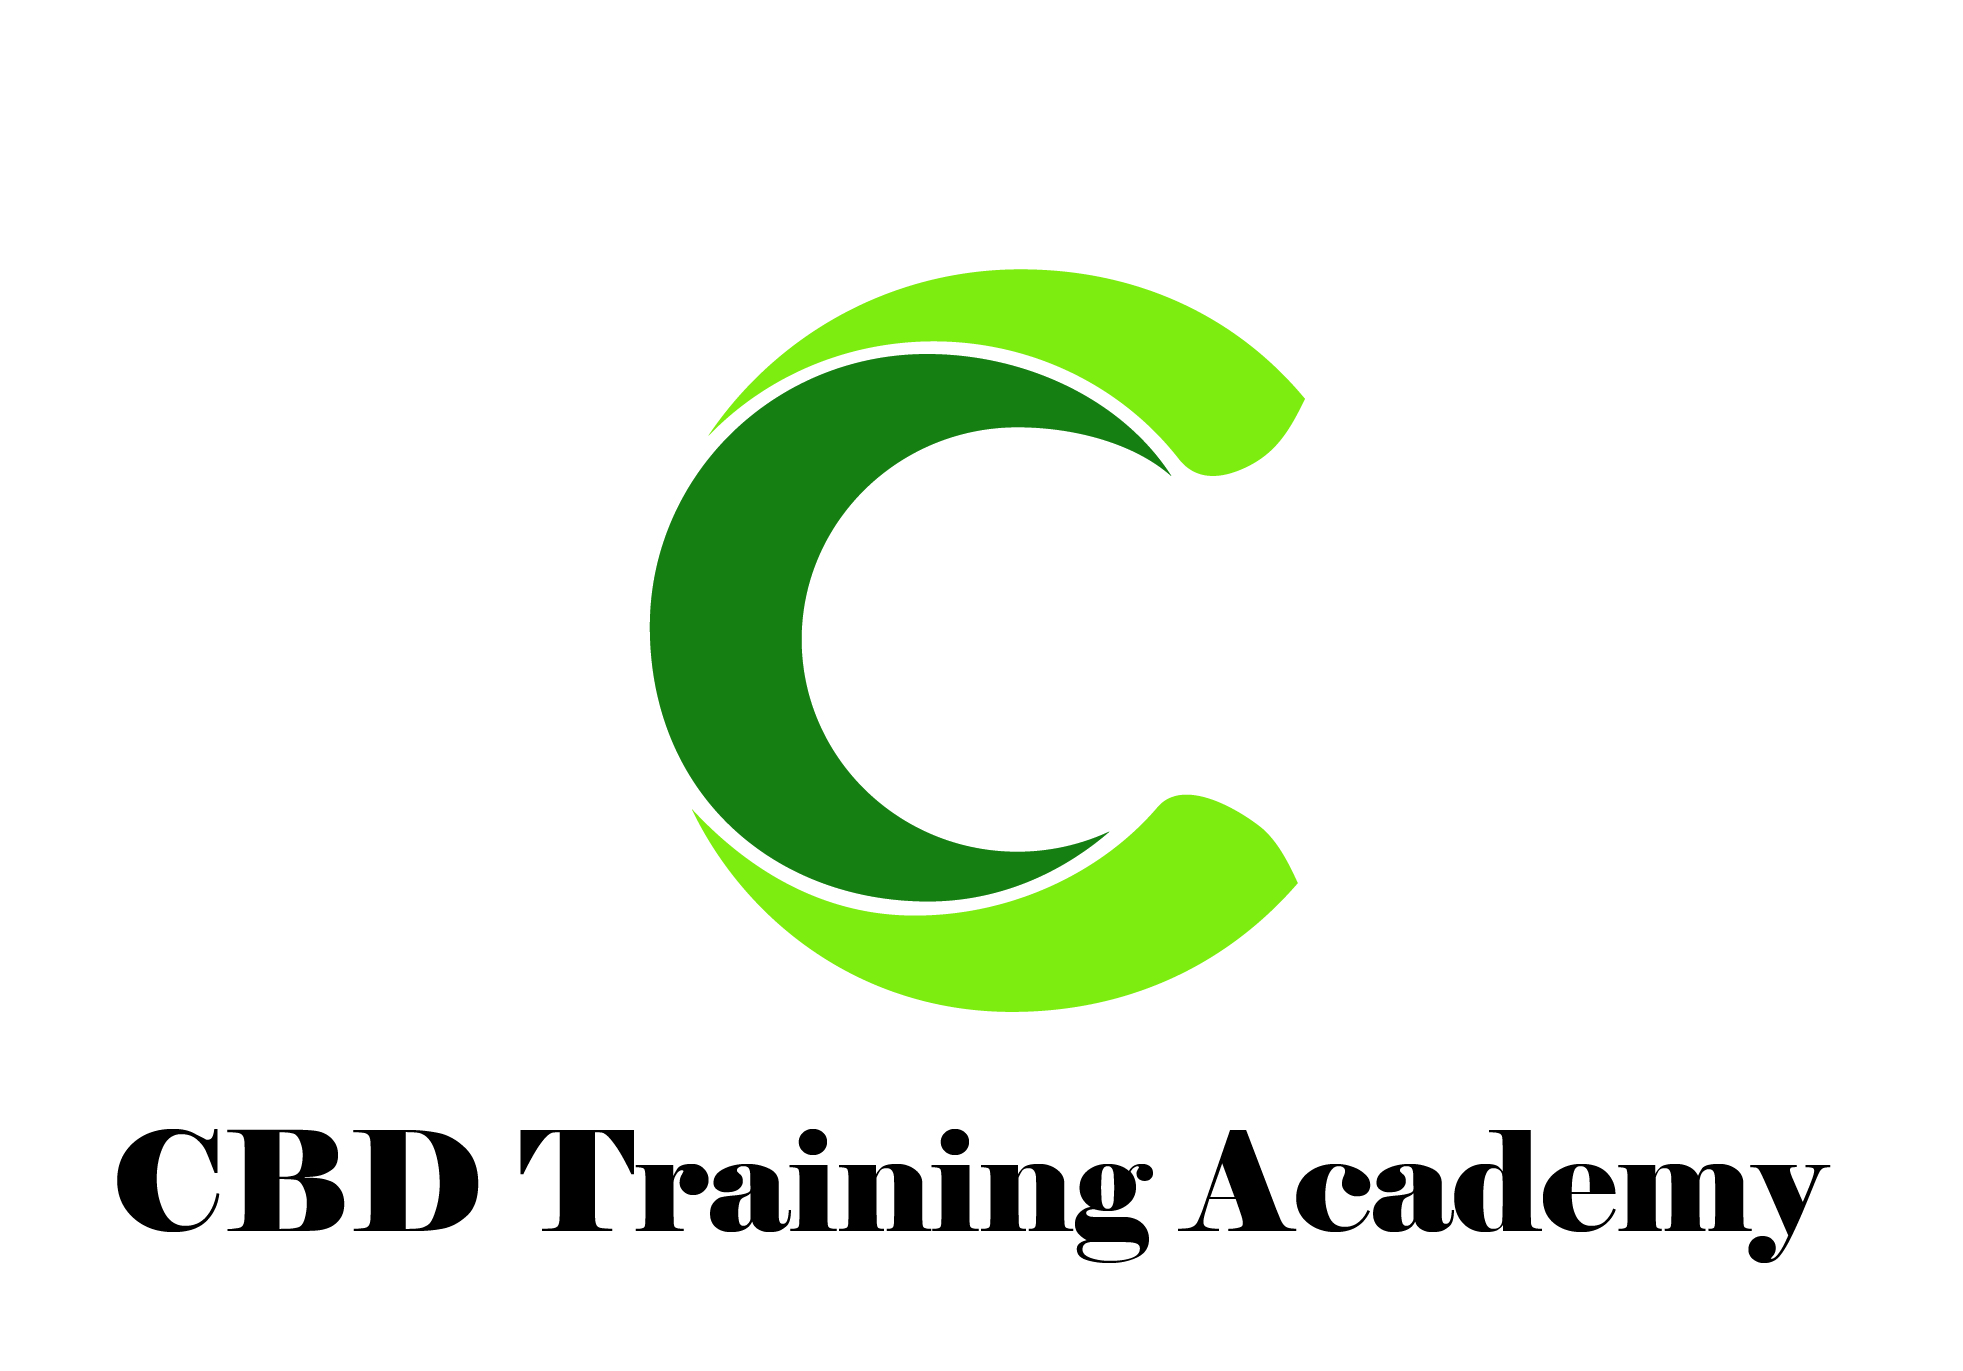 Longevity training academy sponsor CBD Training Academy